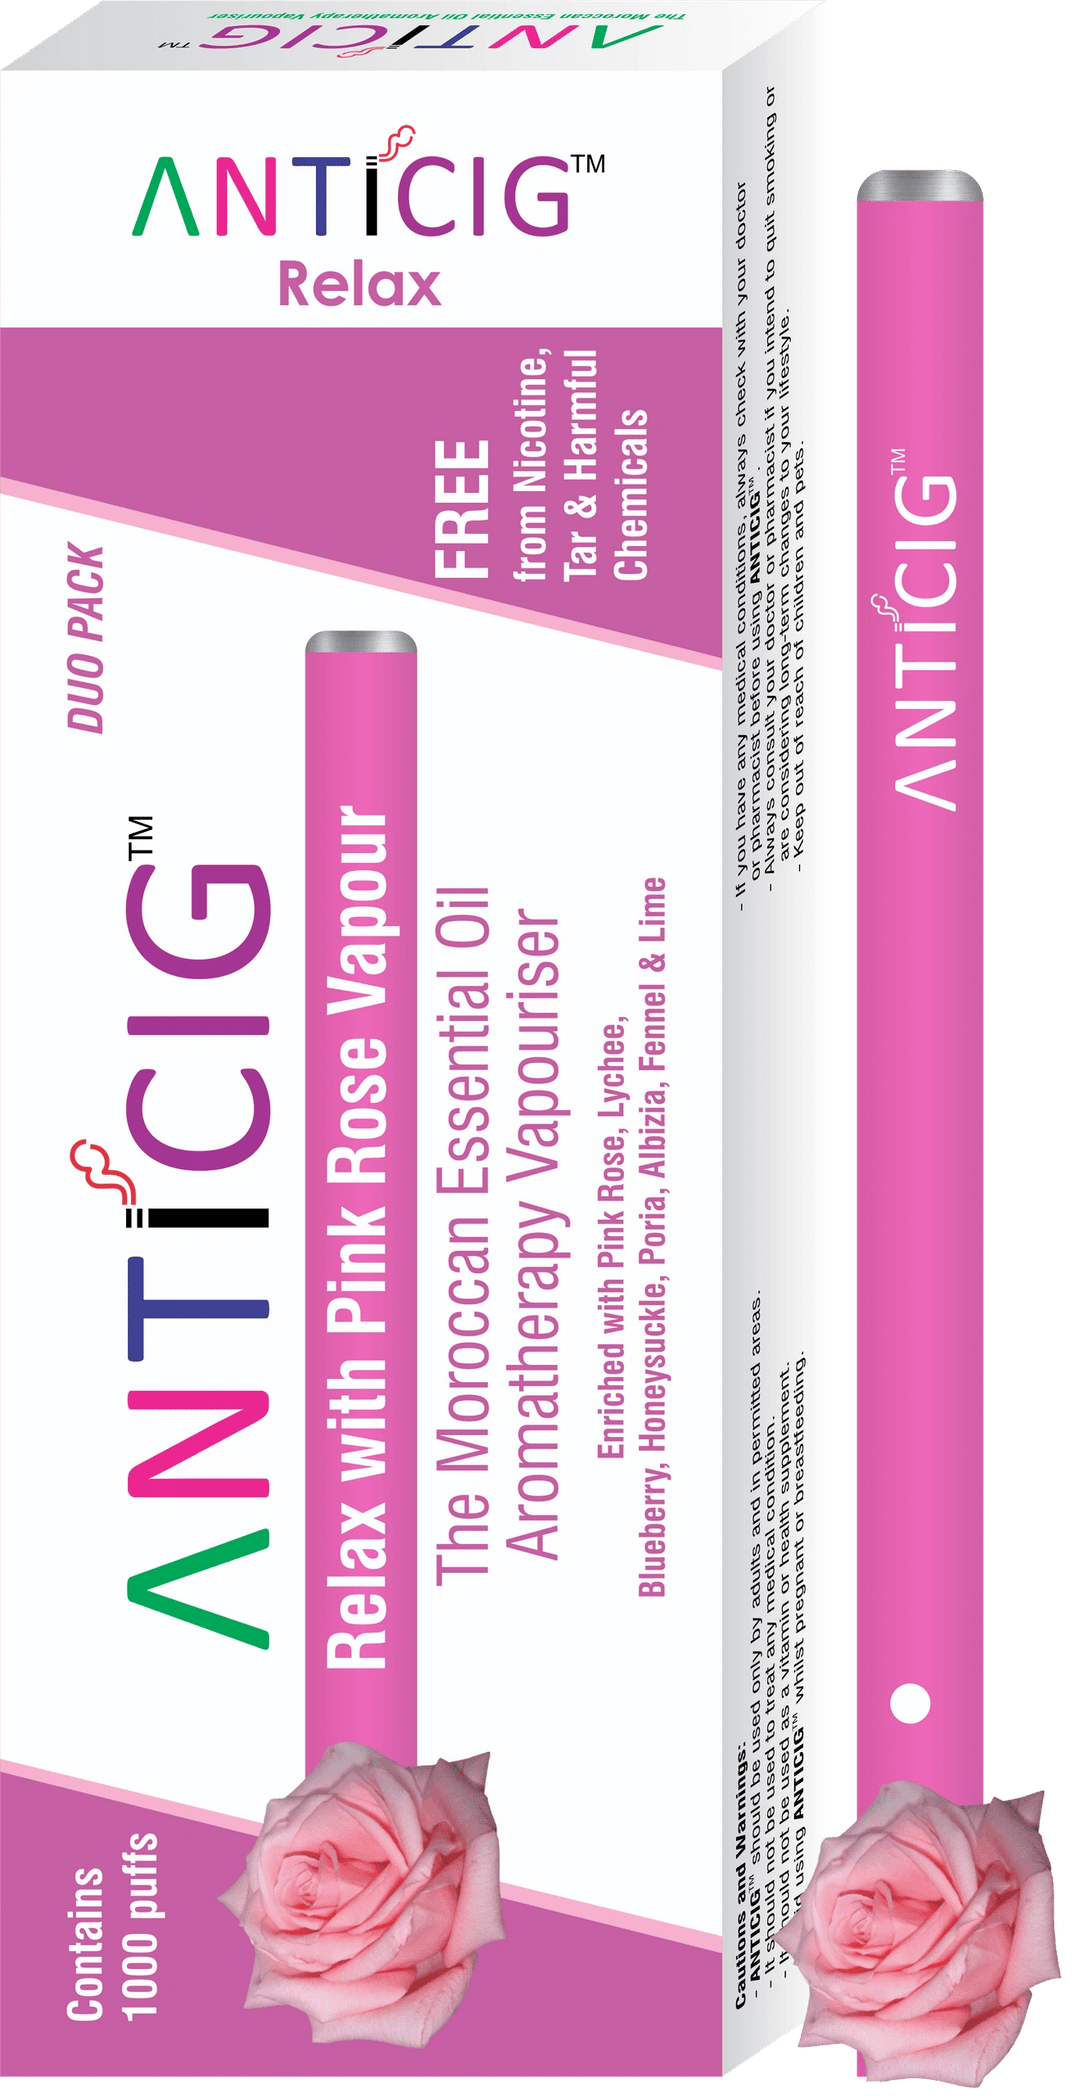 anticig aromatherapy vapouriser 0 nicotine -بدون نيكوتين uae vapor - 14